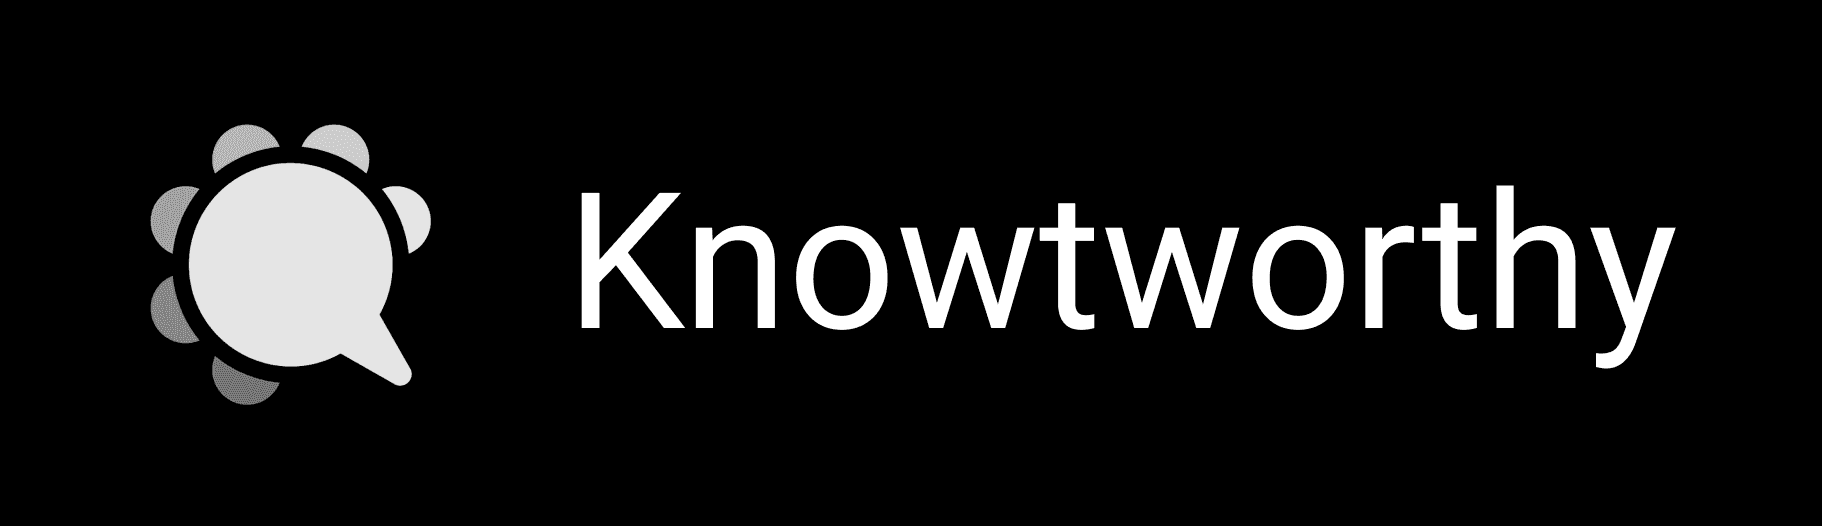 Black Knowtworthy logo with Company Name